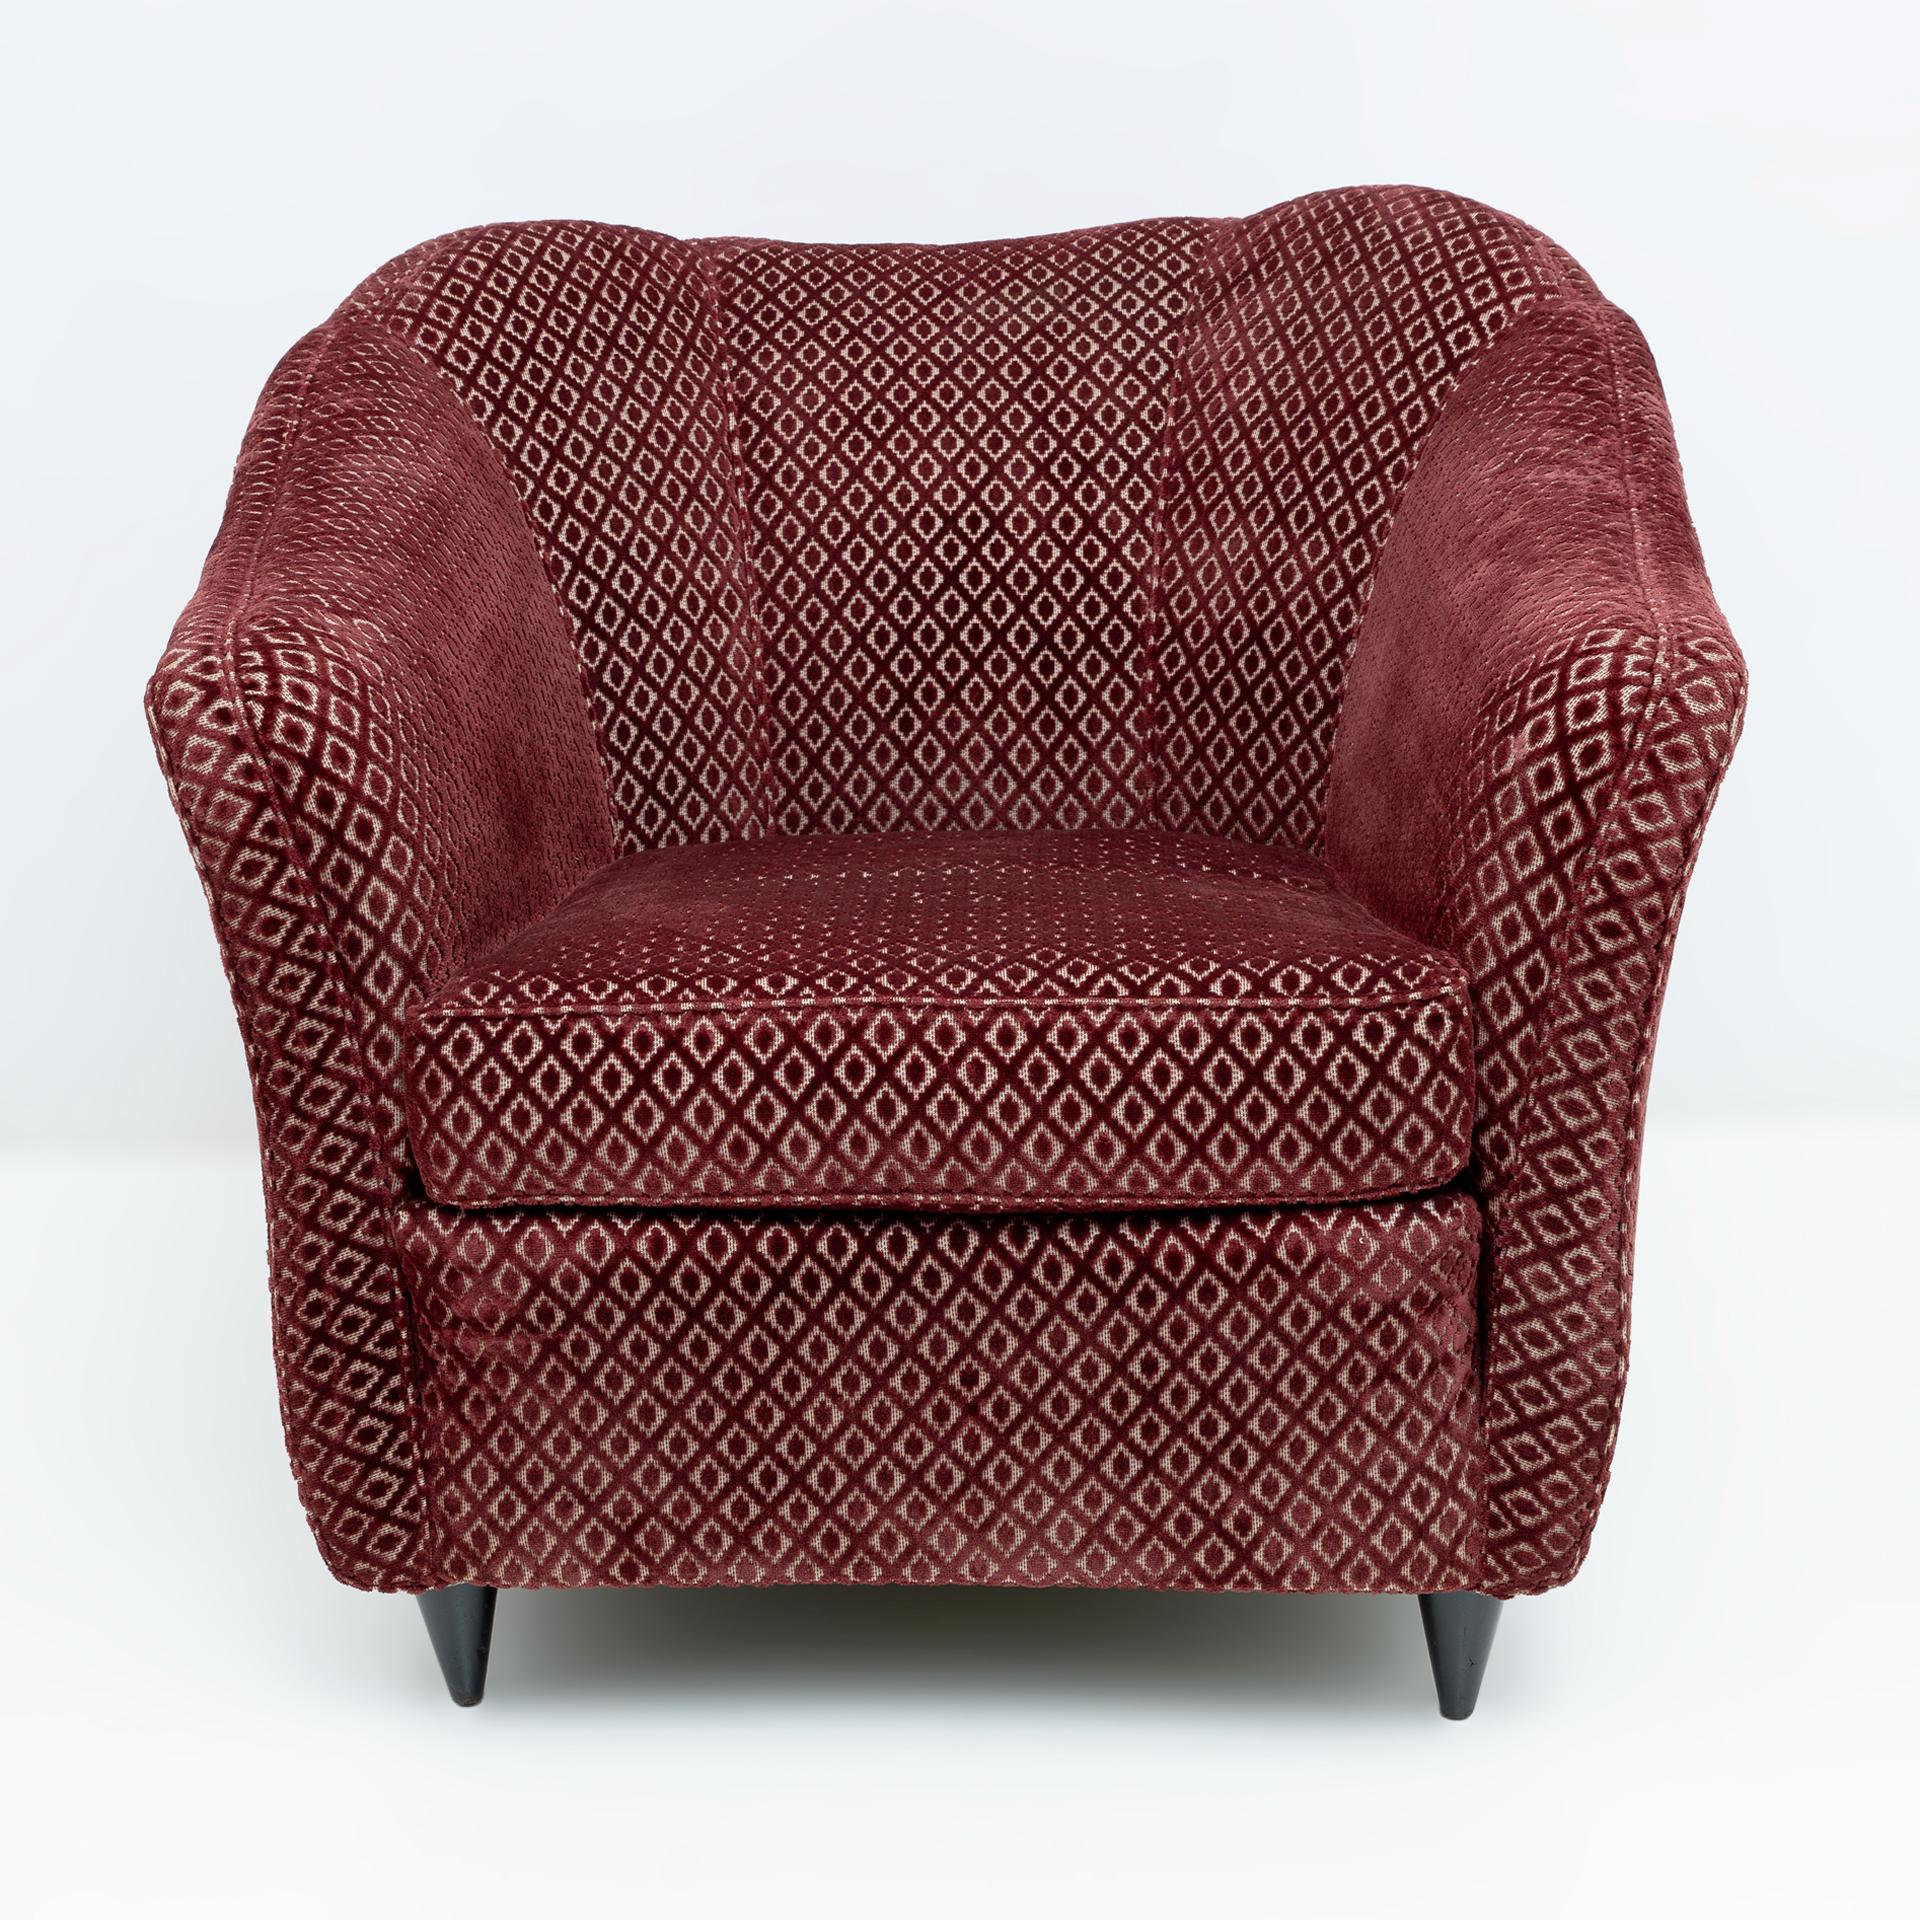 Pair of Gio Ponti Mid-Century Modern Velvet Armchairs for Casa e Giardino, 1950s For Sale 3